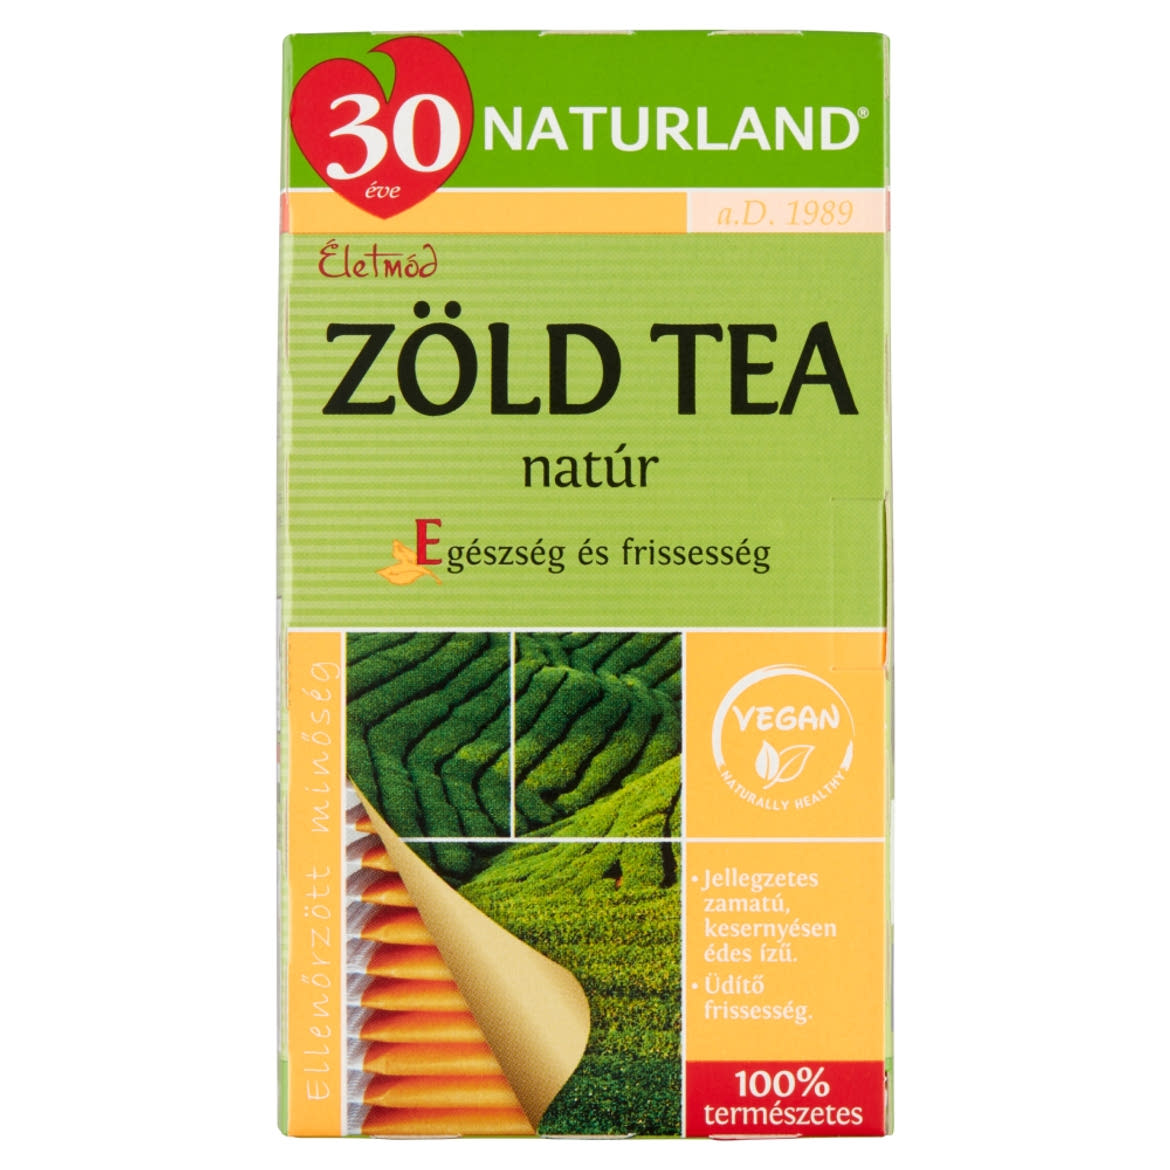 Naturland Életmód natúr zöld tea